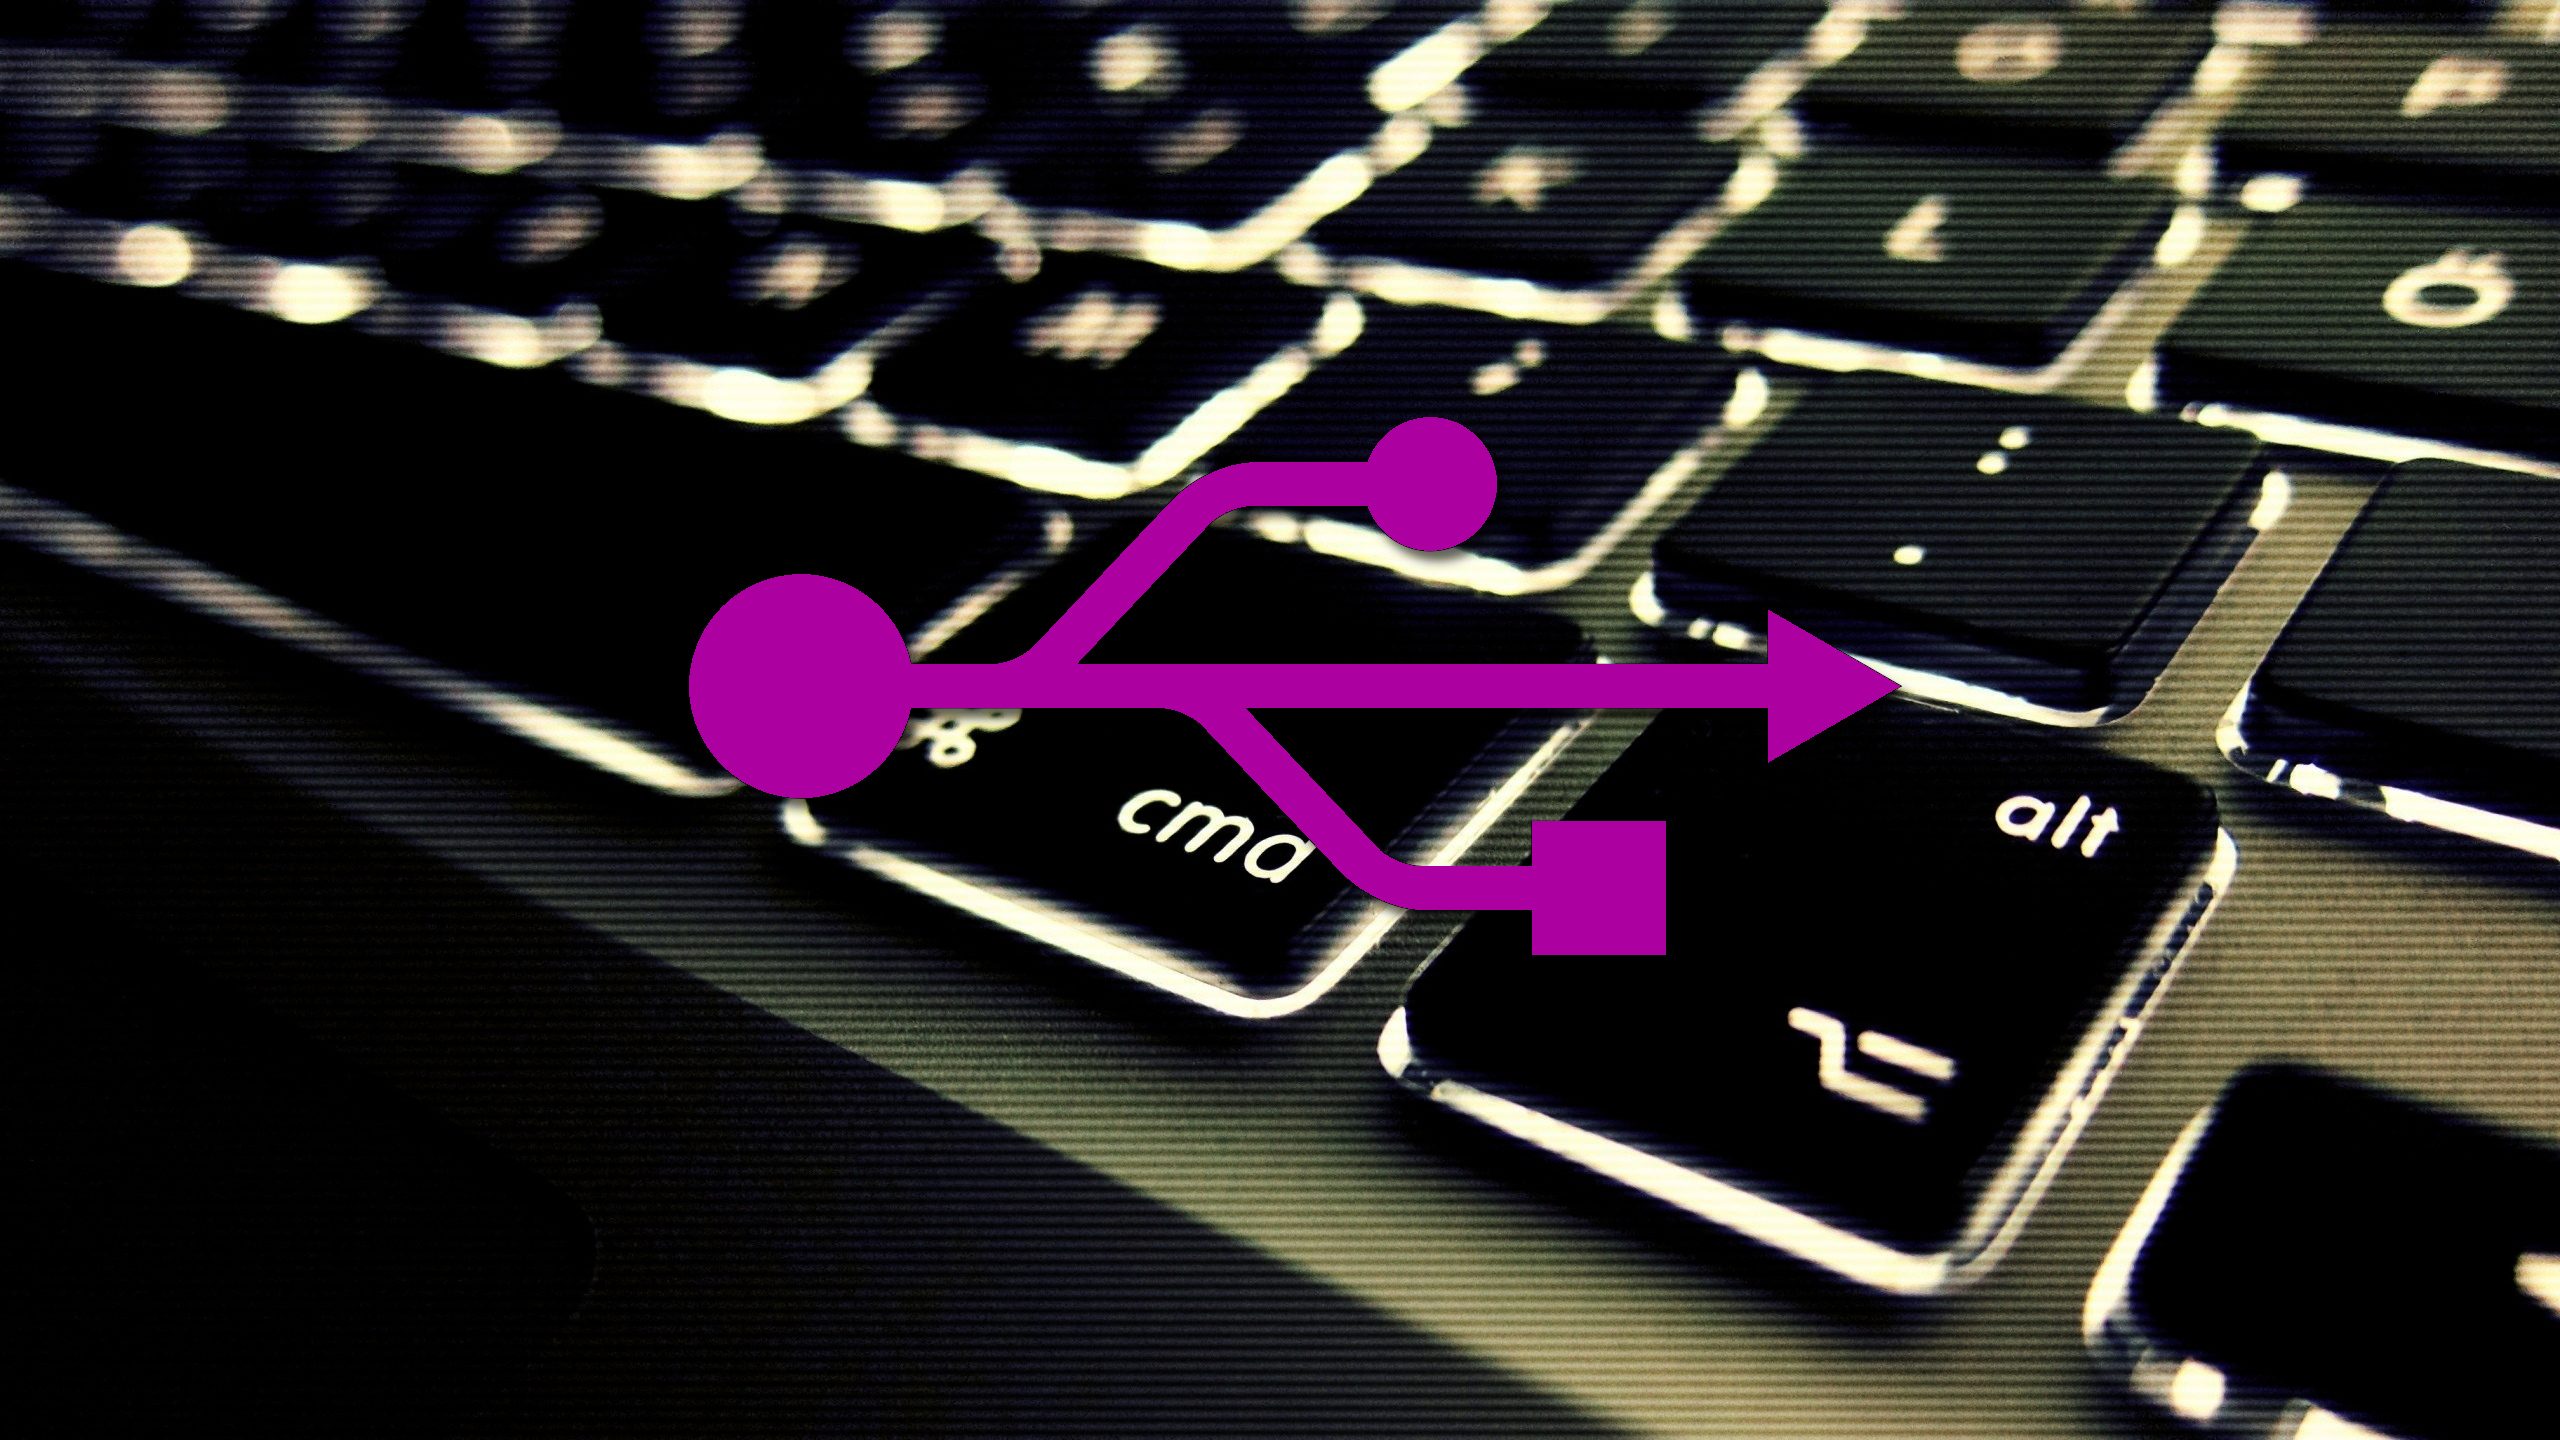 image of keyboard with usb logo overlay